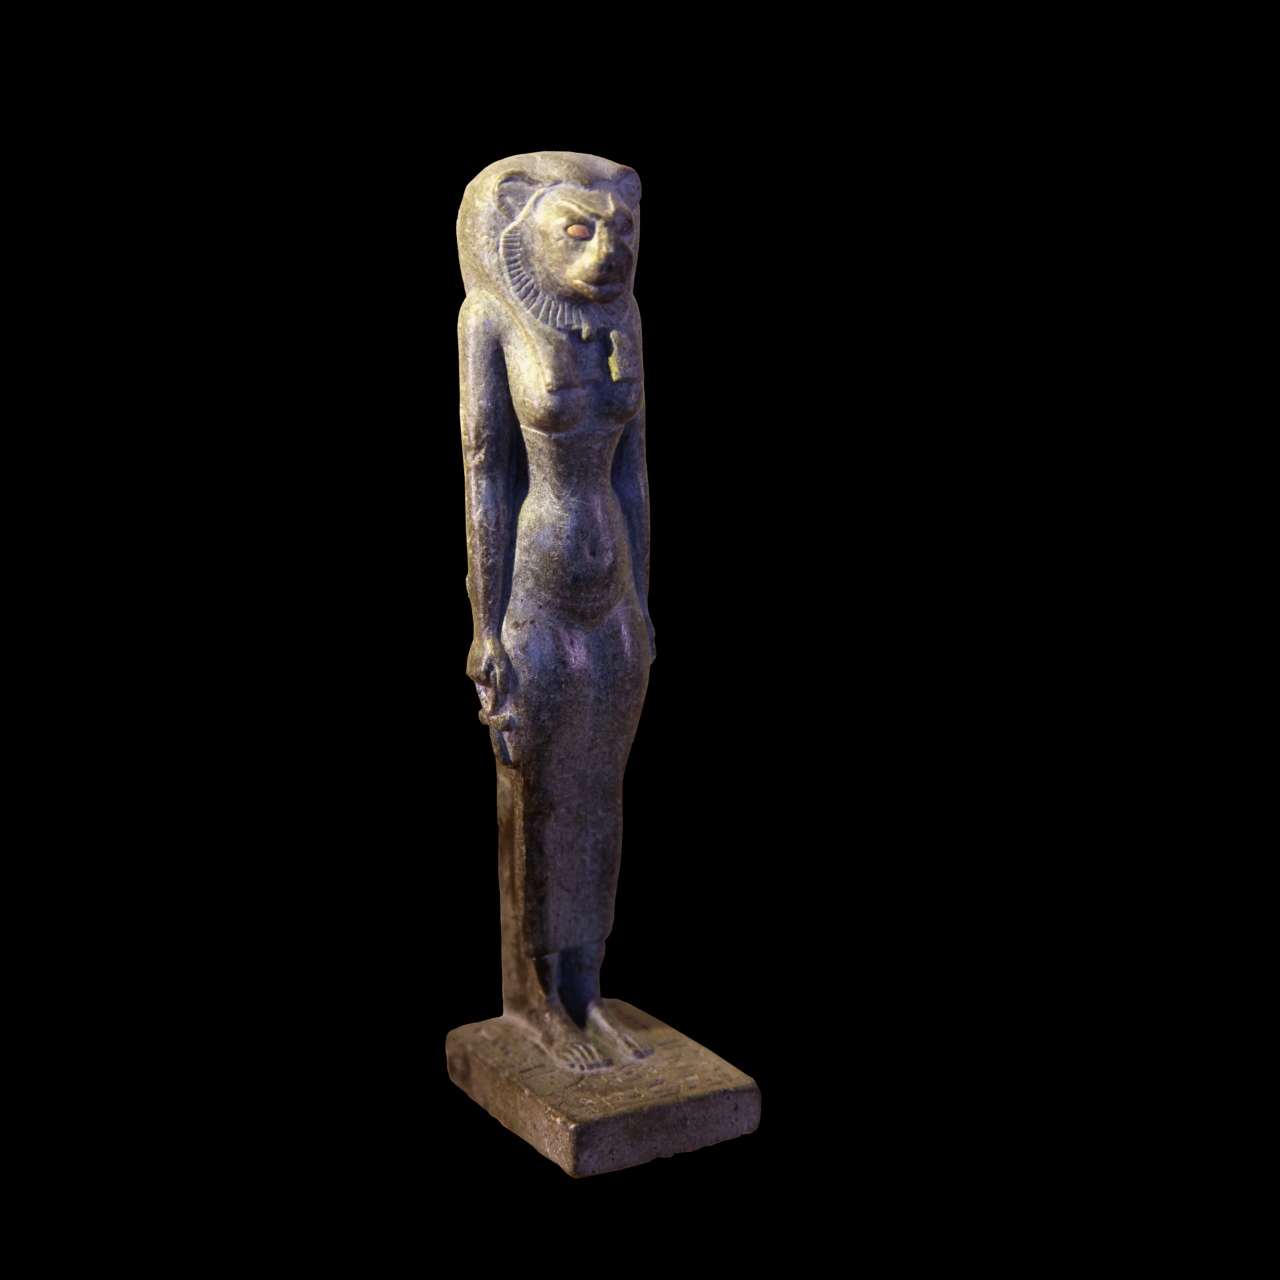 bastet sculpture file bastet e 3915 img 0481 black wikimedia mons of bastet sculpture